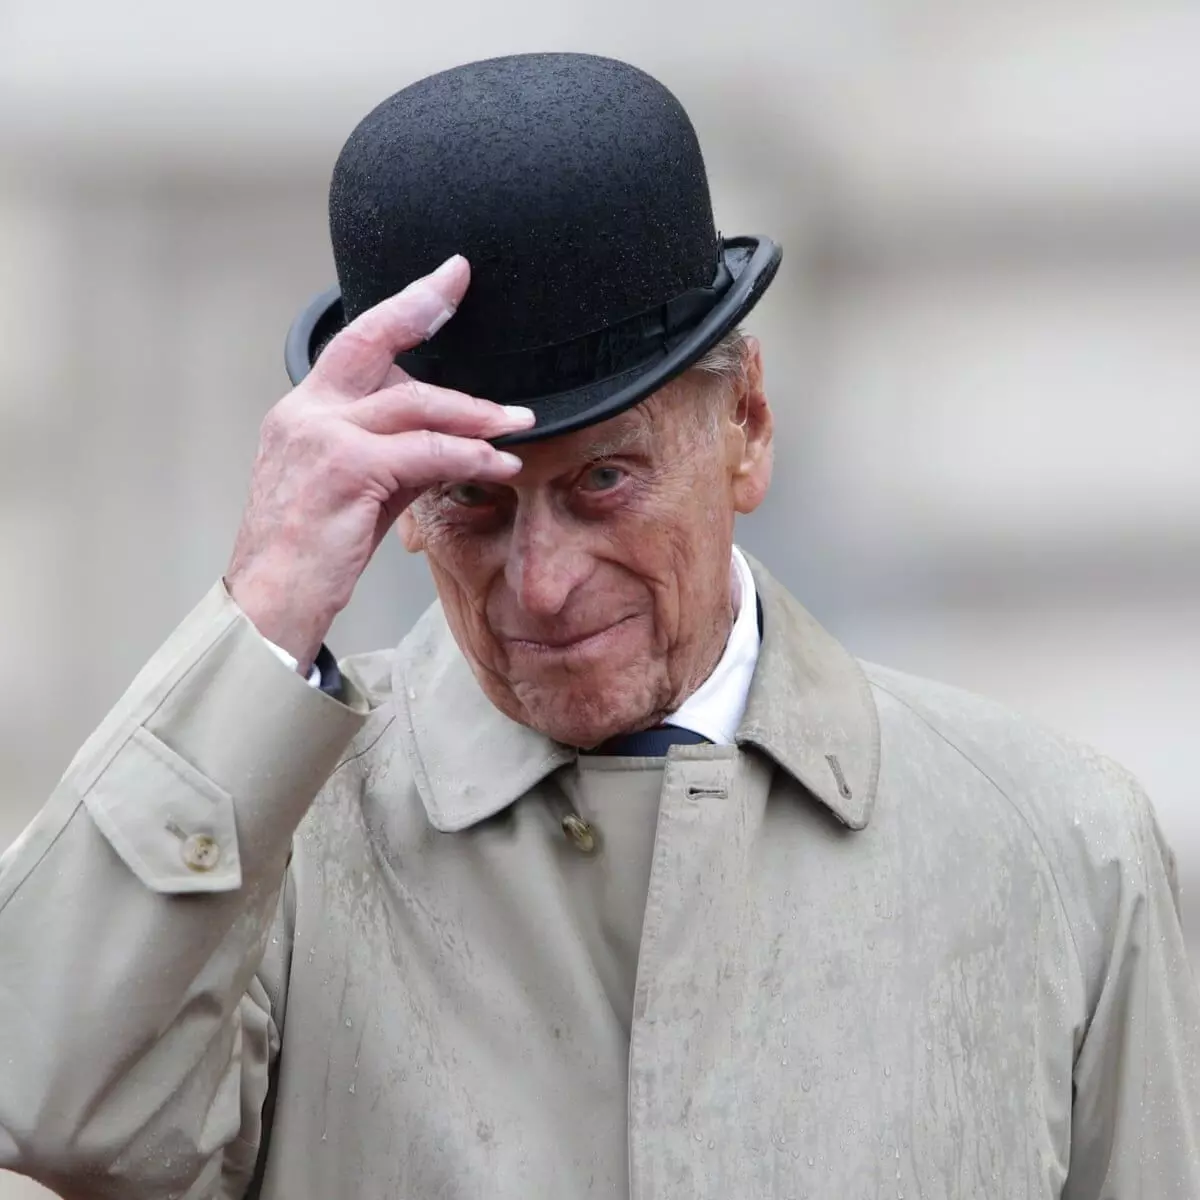 Britain’s Prince Philip ‘ok’ in Hospital, Prince William says